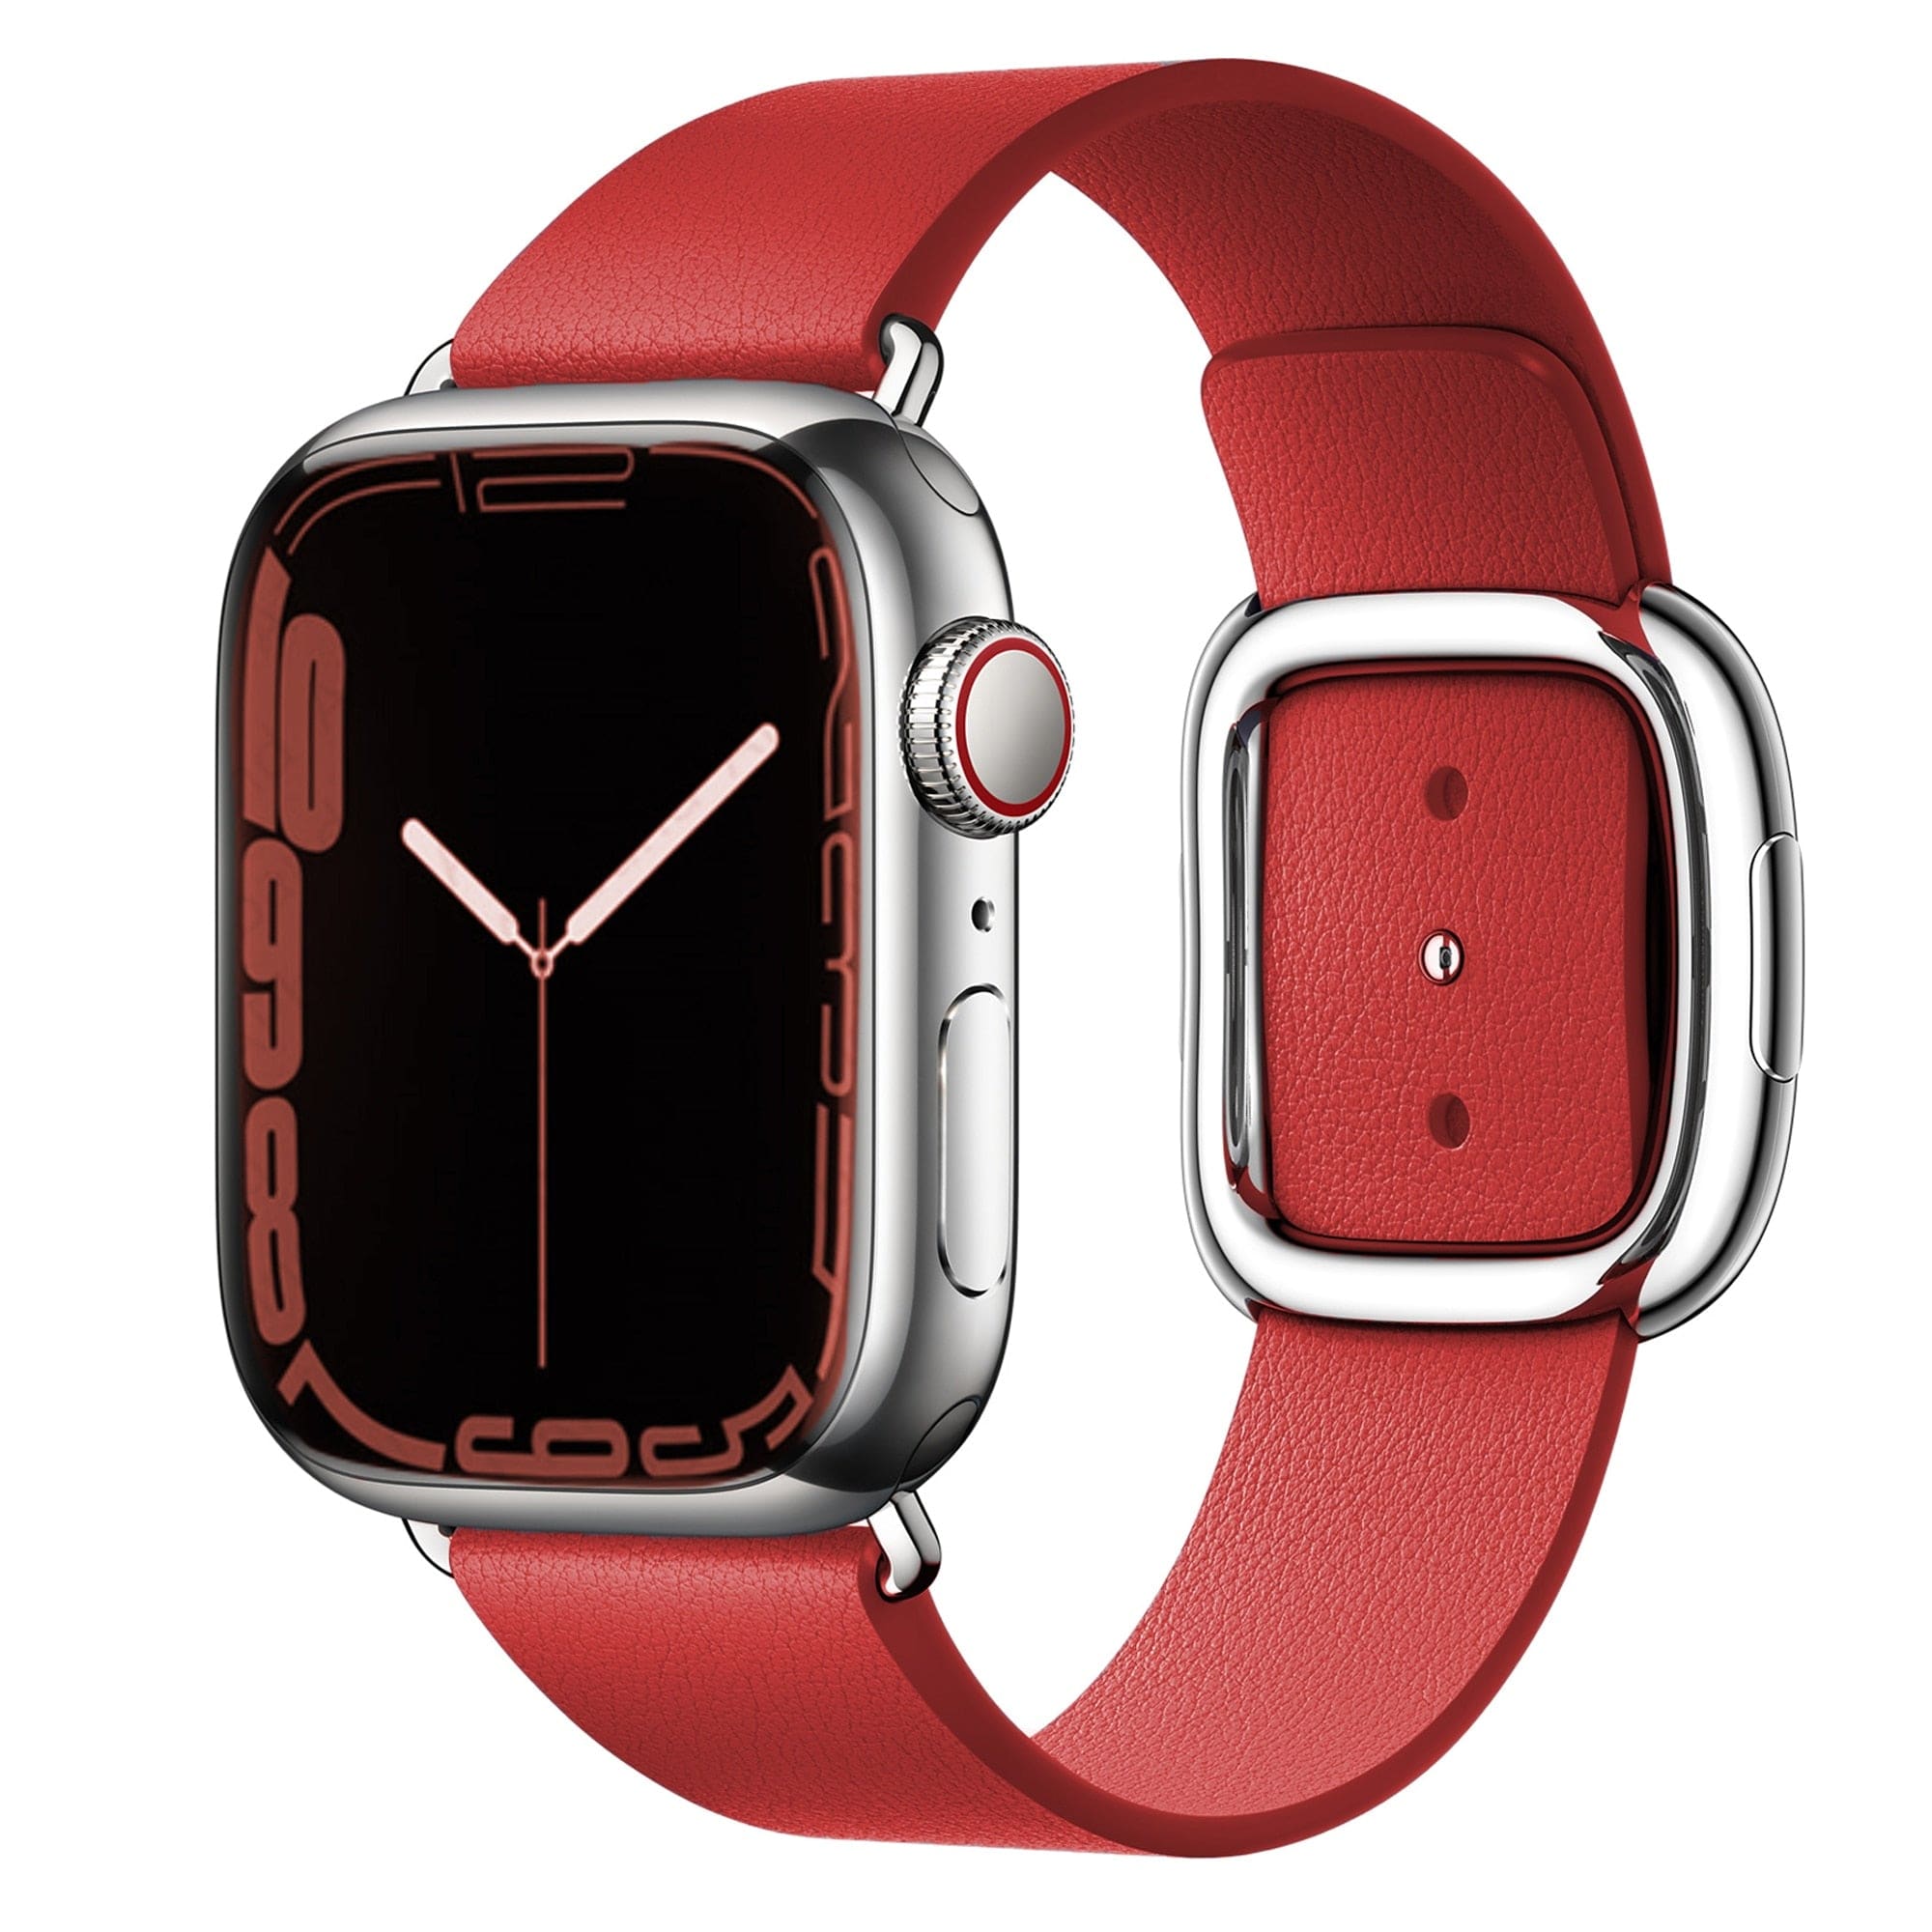 Echtleder-Armband mit Edelstahl-Schnalle - Ruby Red / 38-40-41 mm - Apple Watch Armband